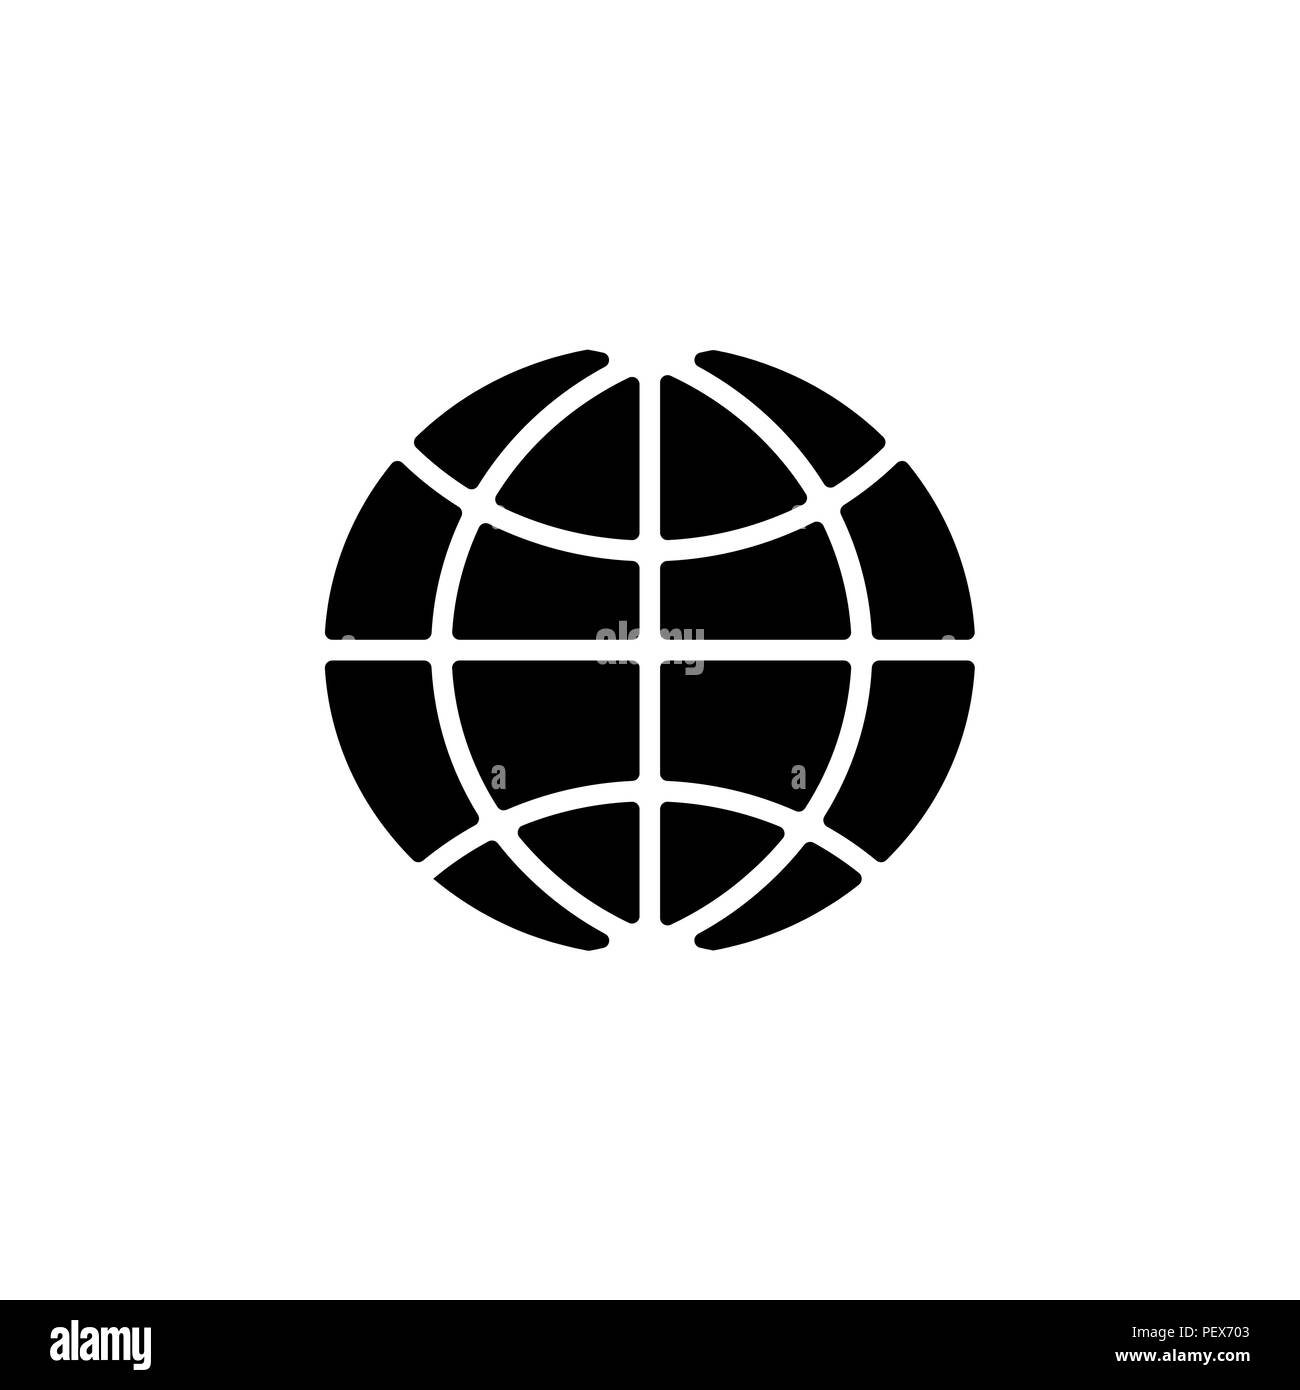 Globe Icon Black and White Stock Photos & Images - Alamy